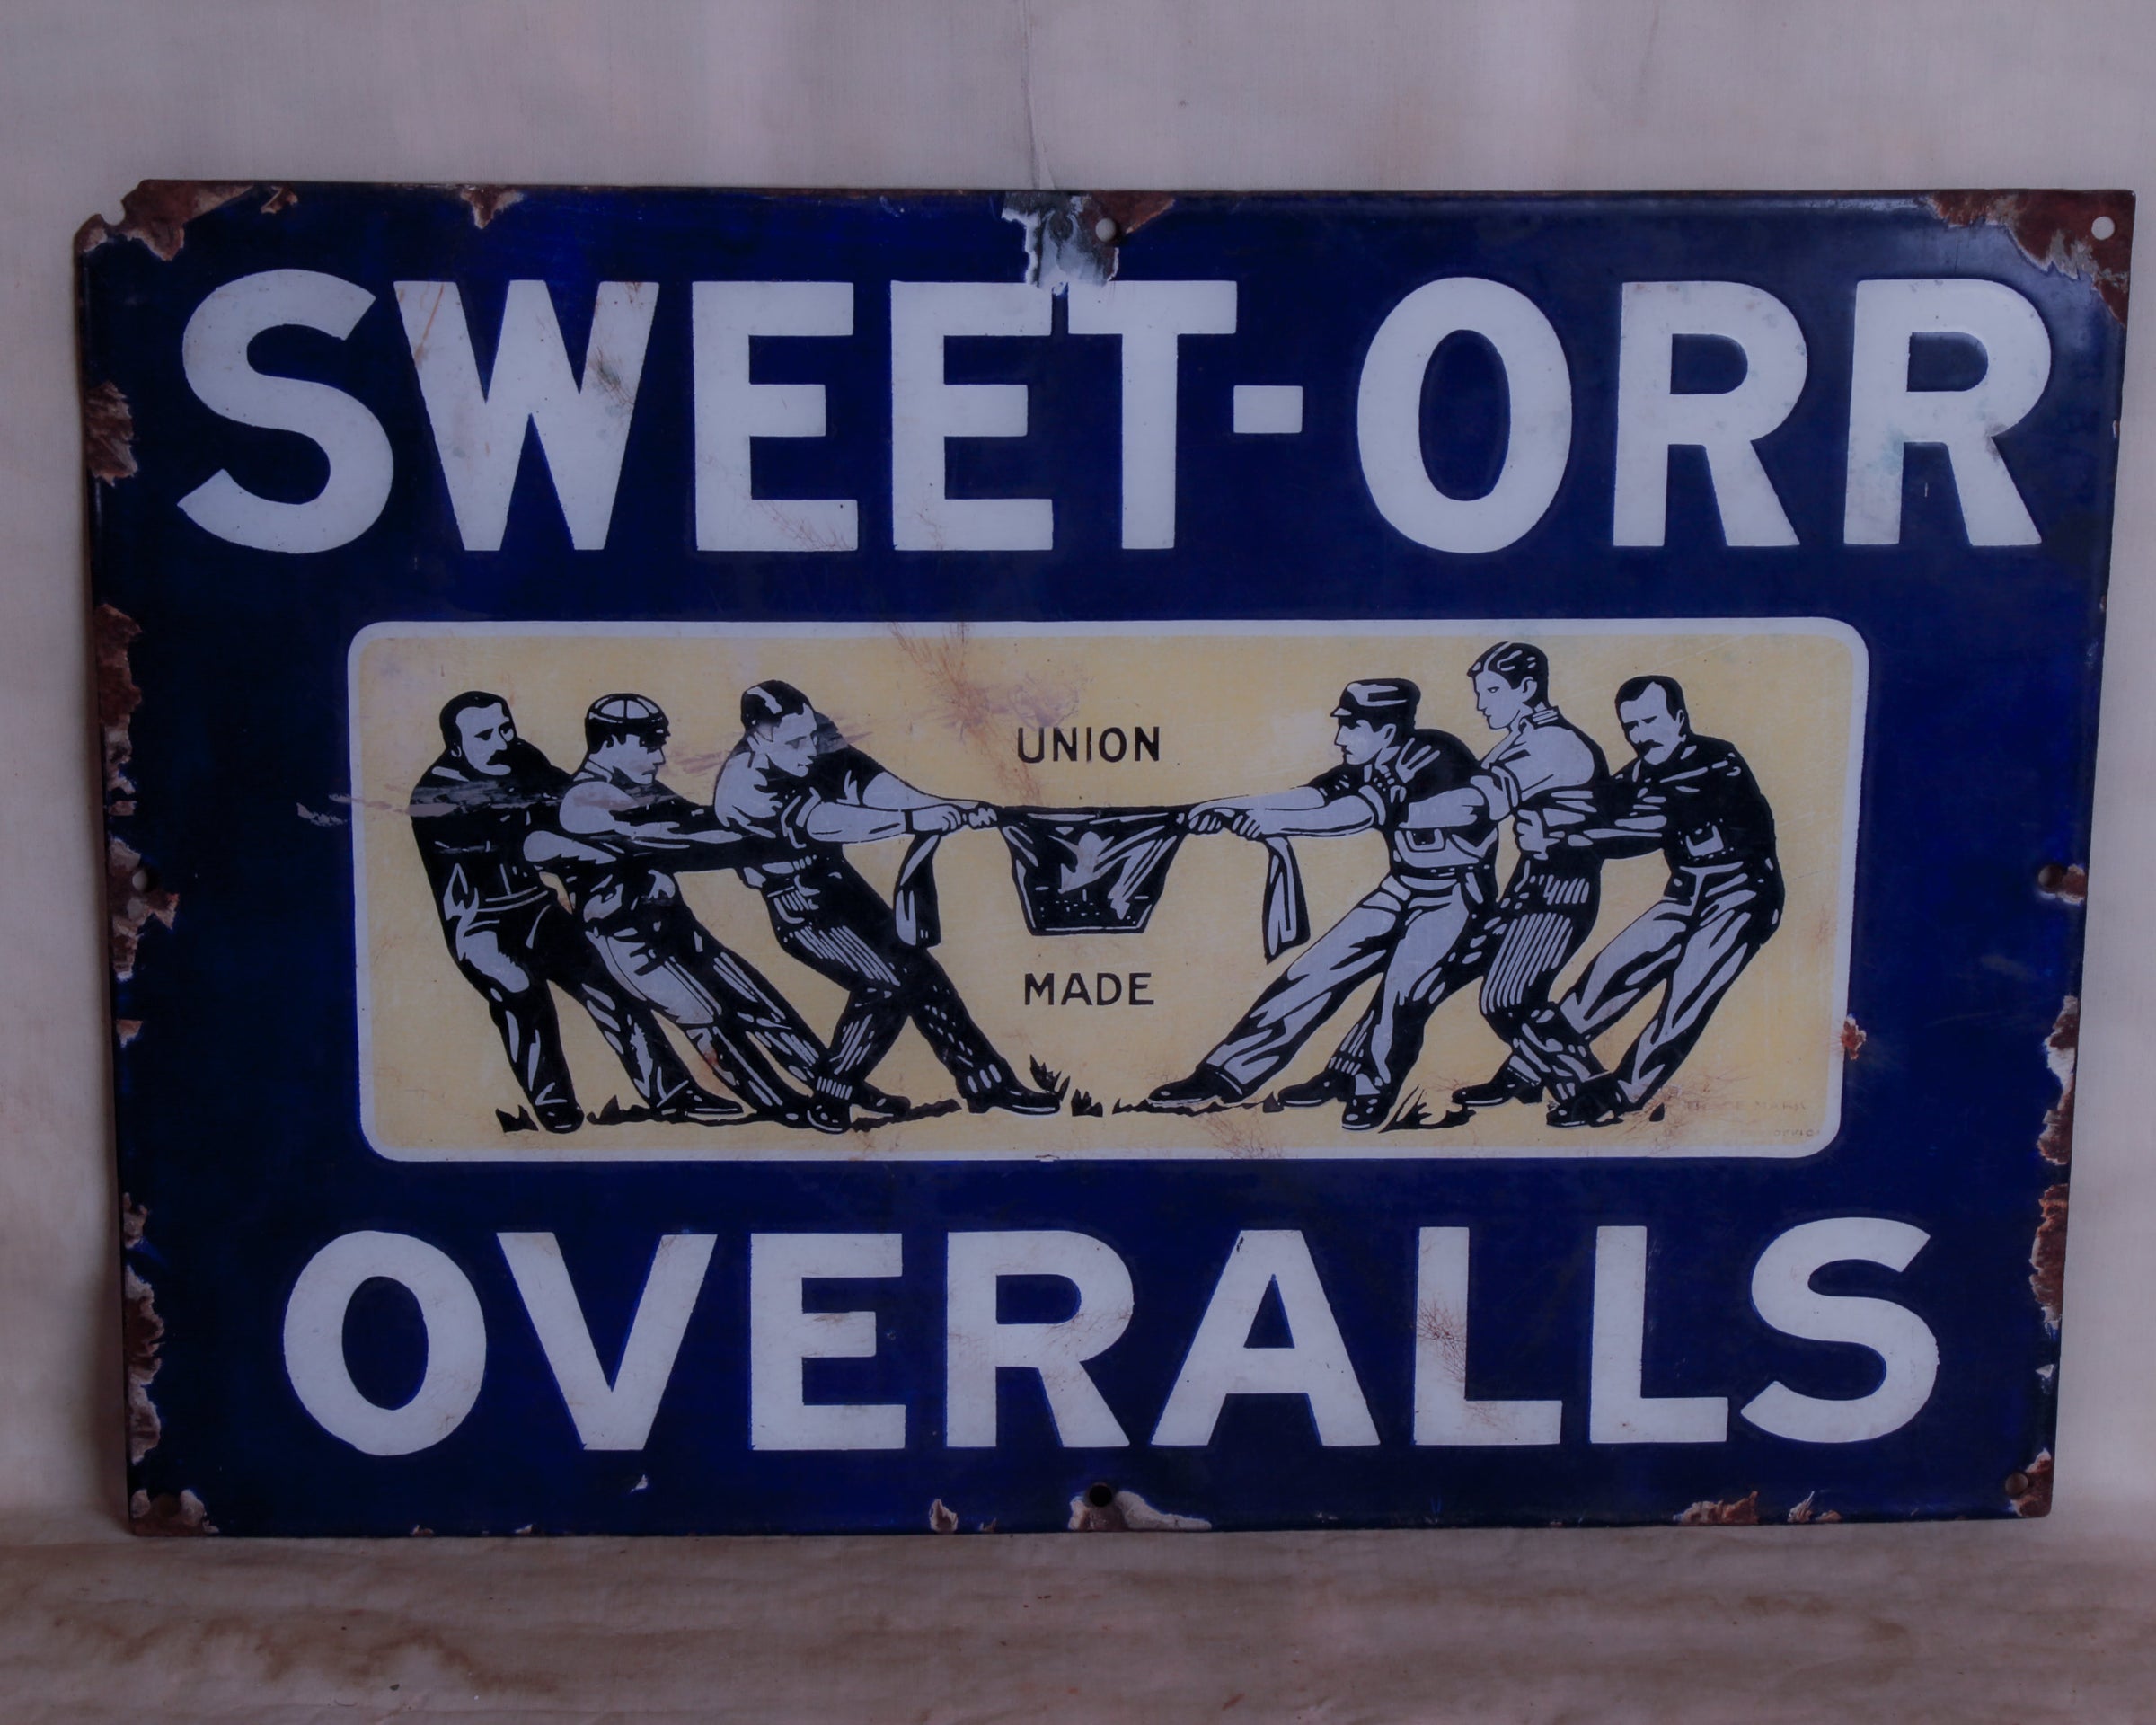 Sweet-Orr sign | Heimwee Antiques